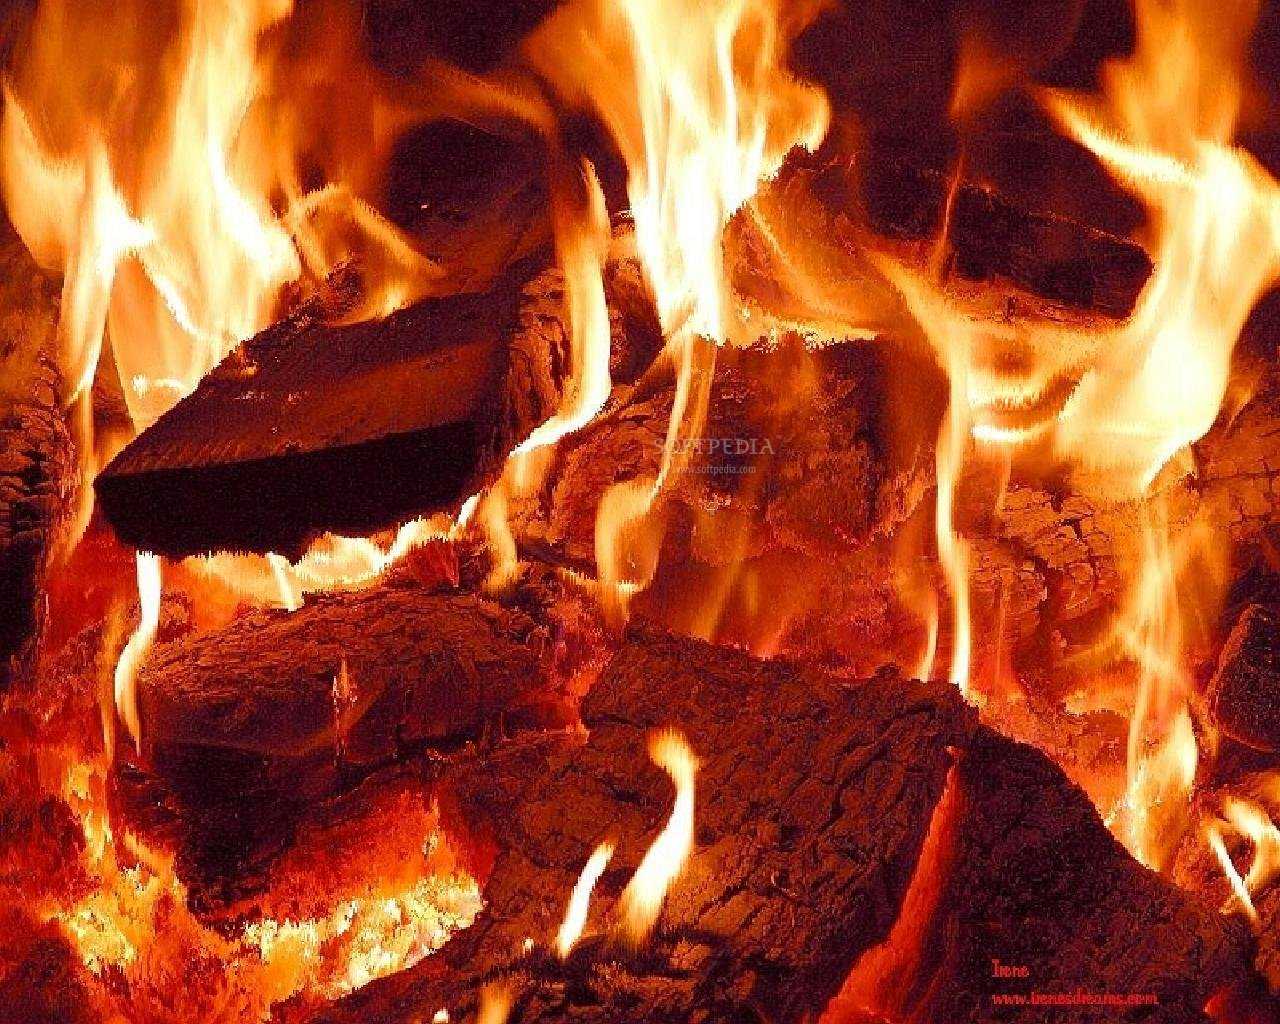 virtual burning fireplace screensaver for pc